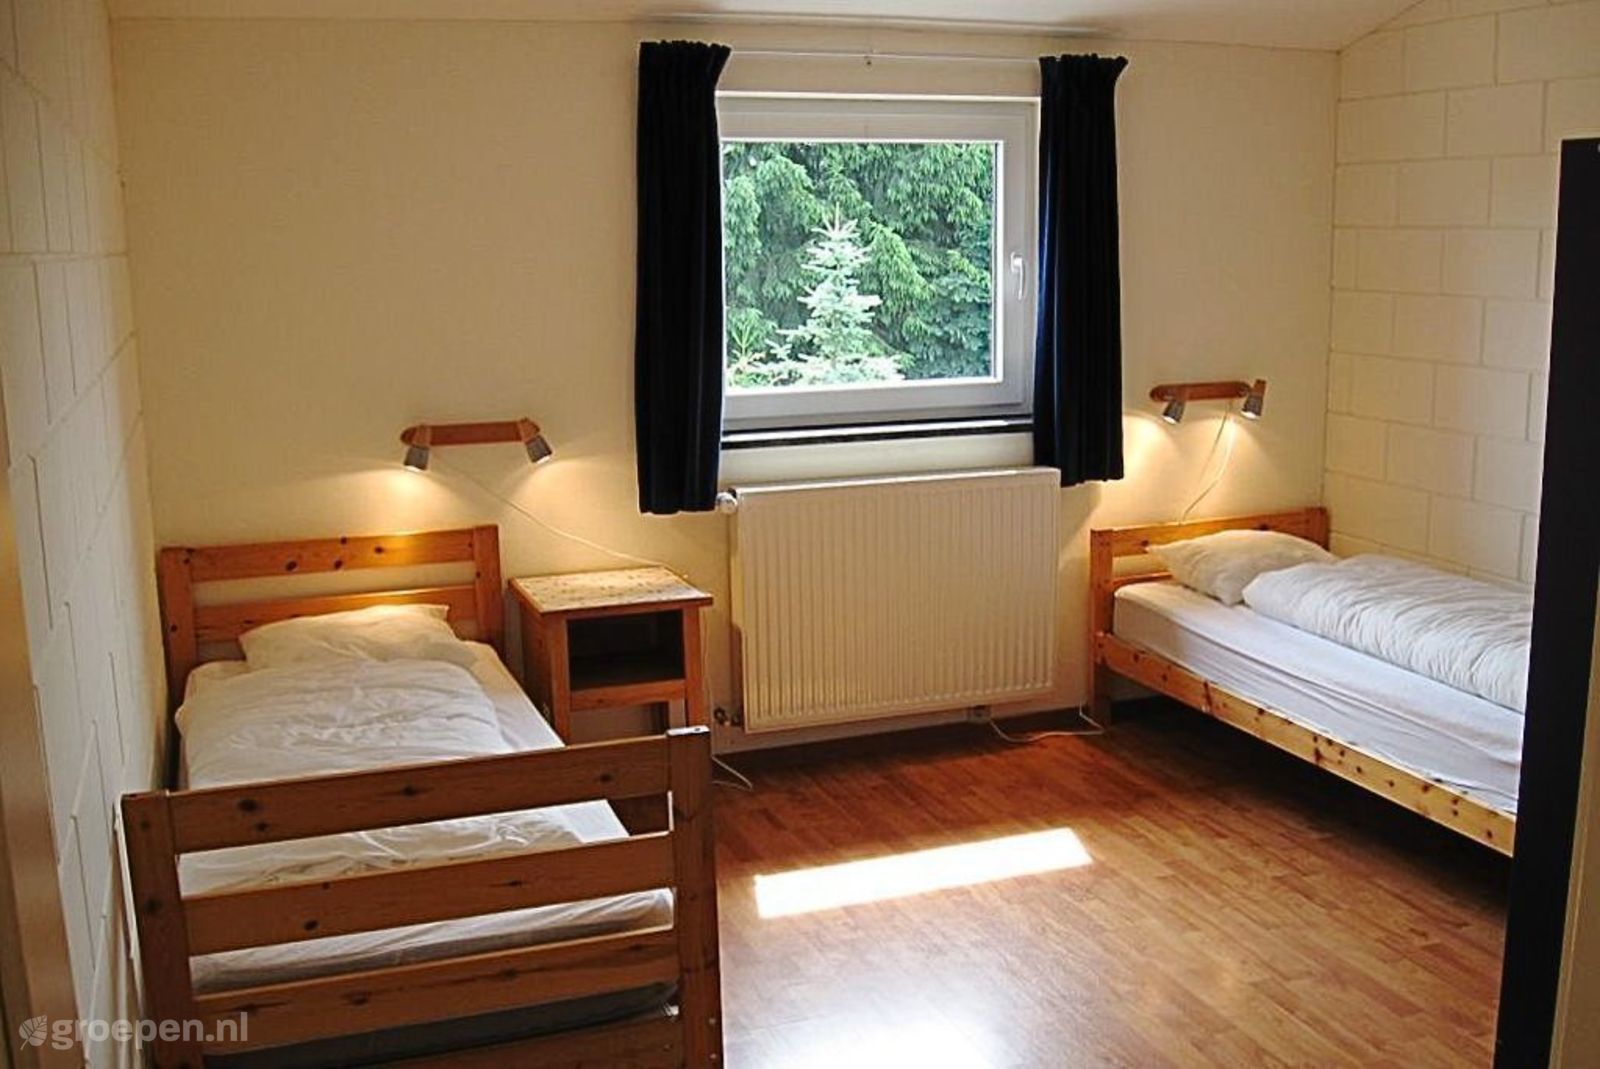 Group accommodation Medendorf